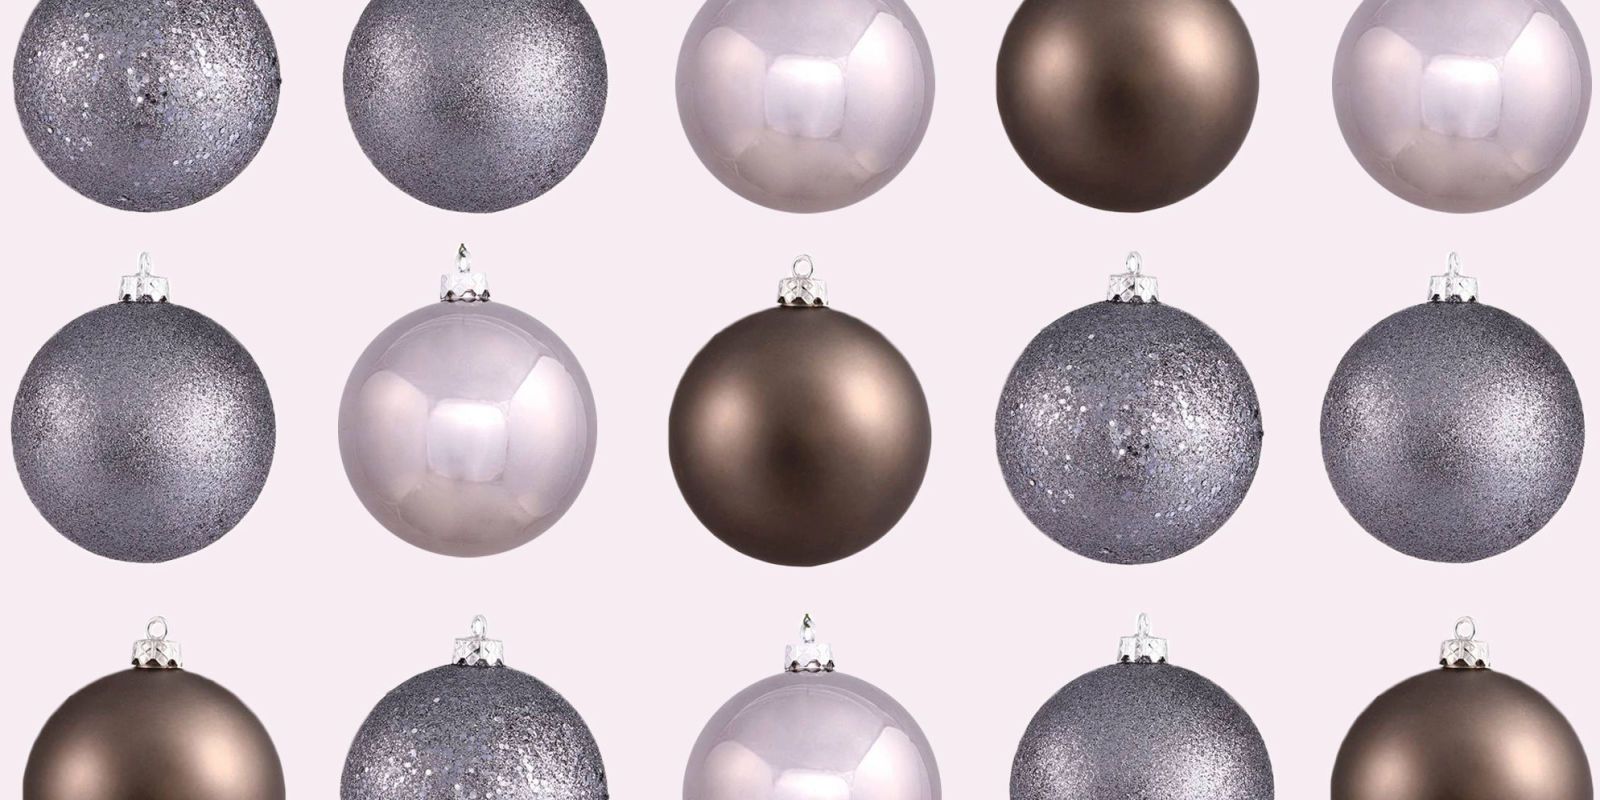 ornament balls that open